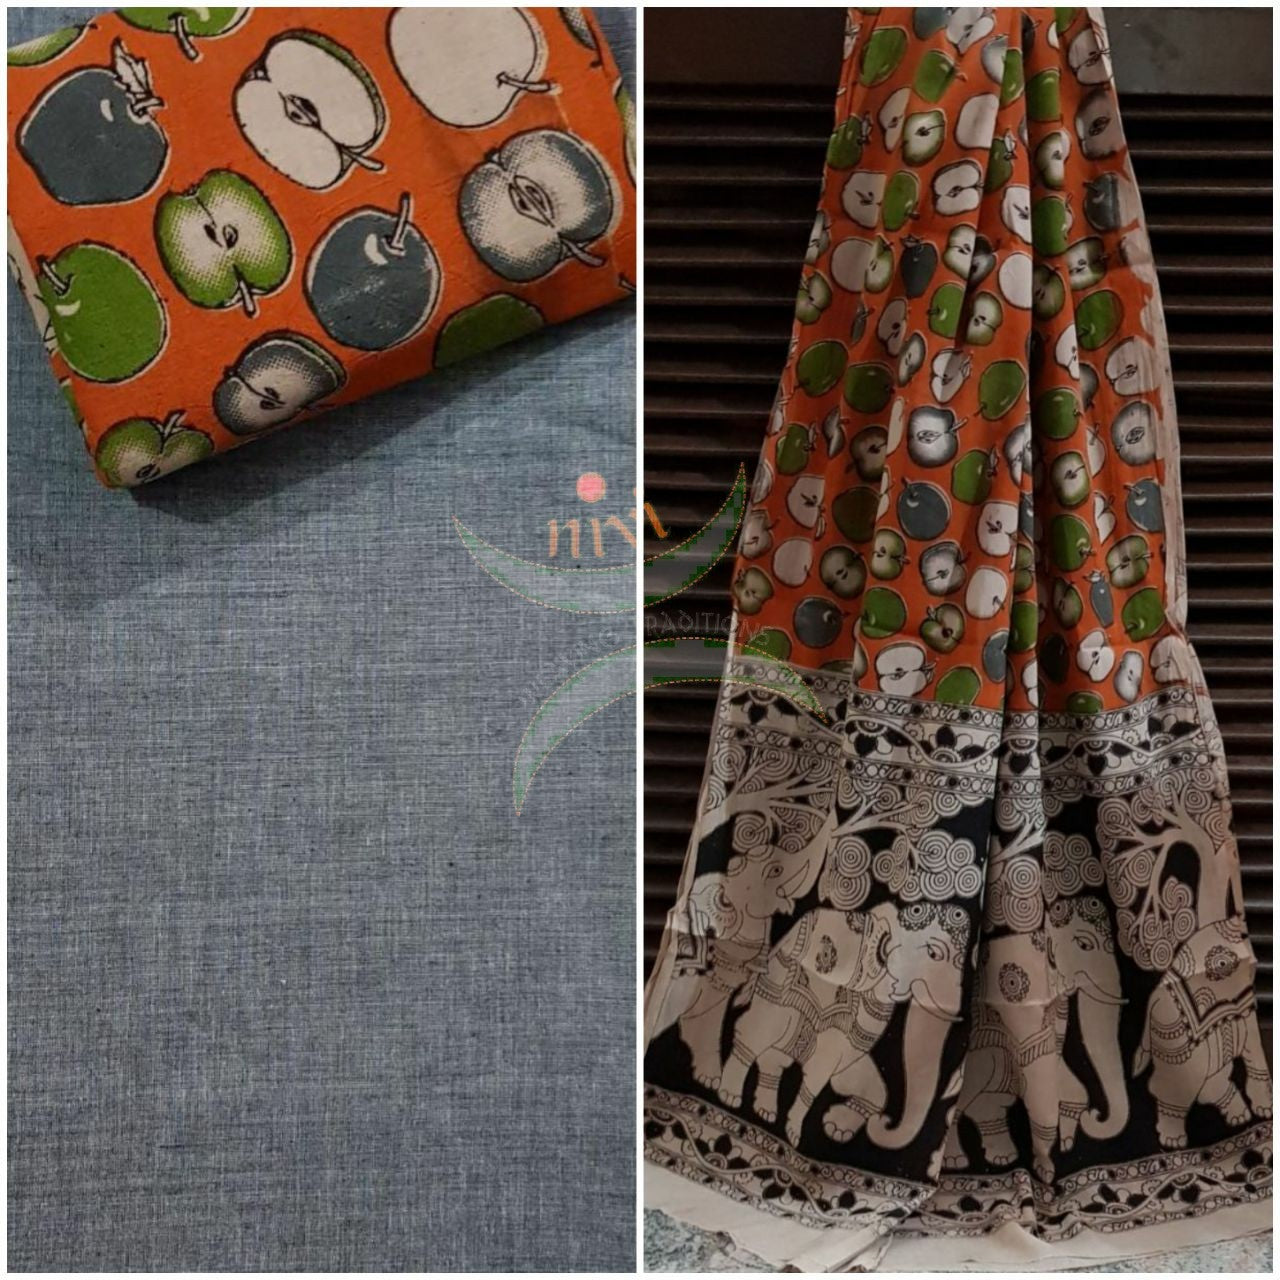 Handloom Mul cotton orange quirky apple motif print kalamkari dupatta and bottom with grey mangalgiri Cotton top.